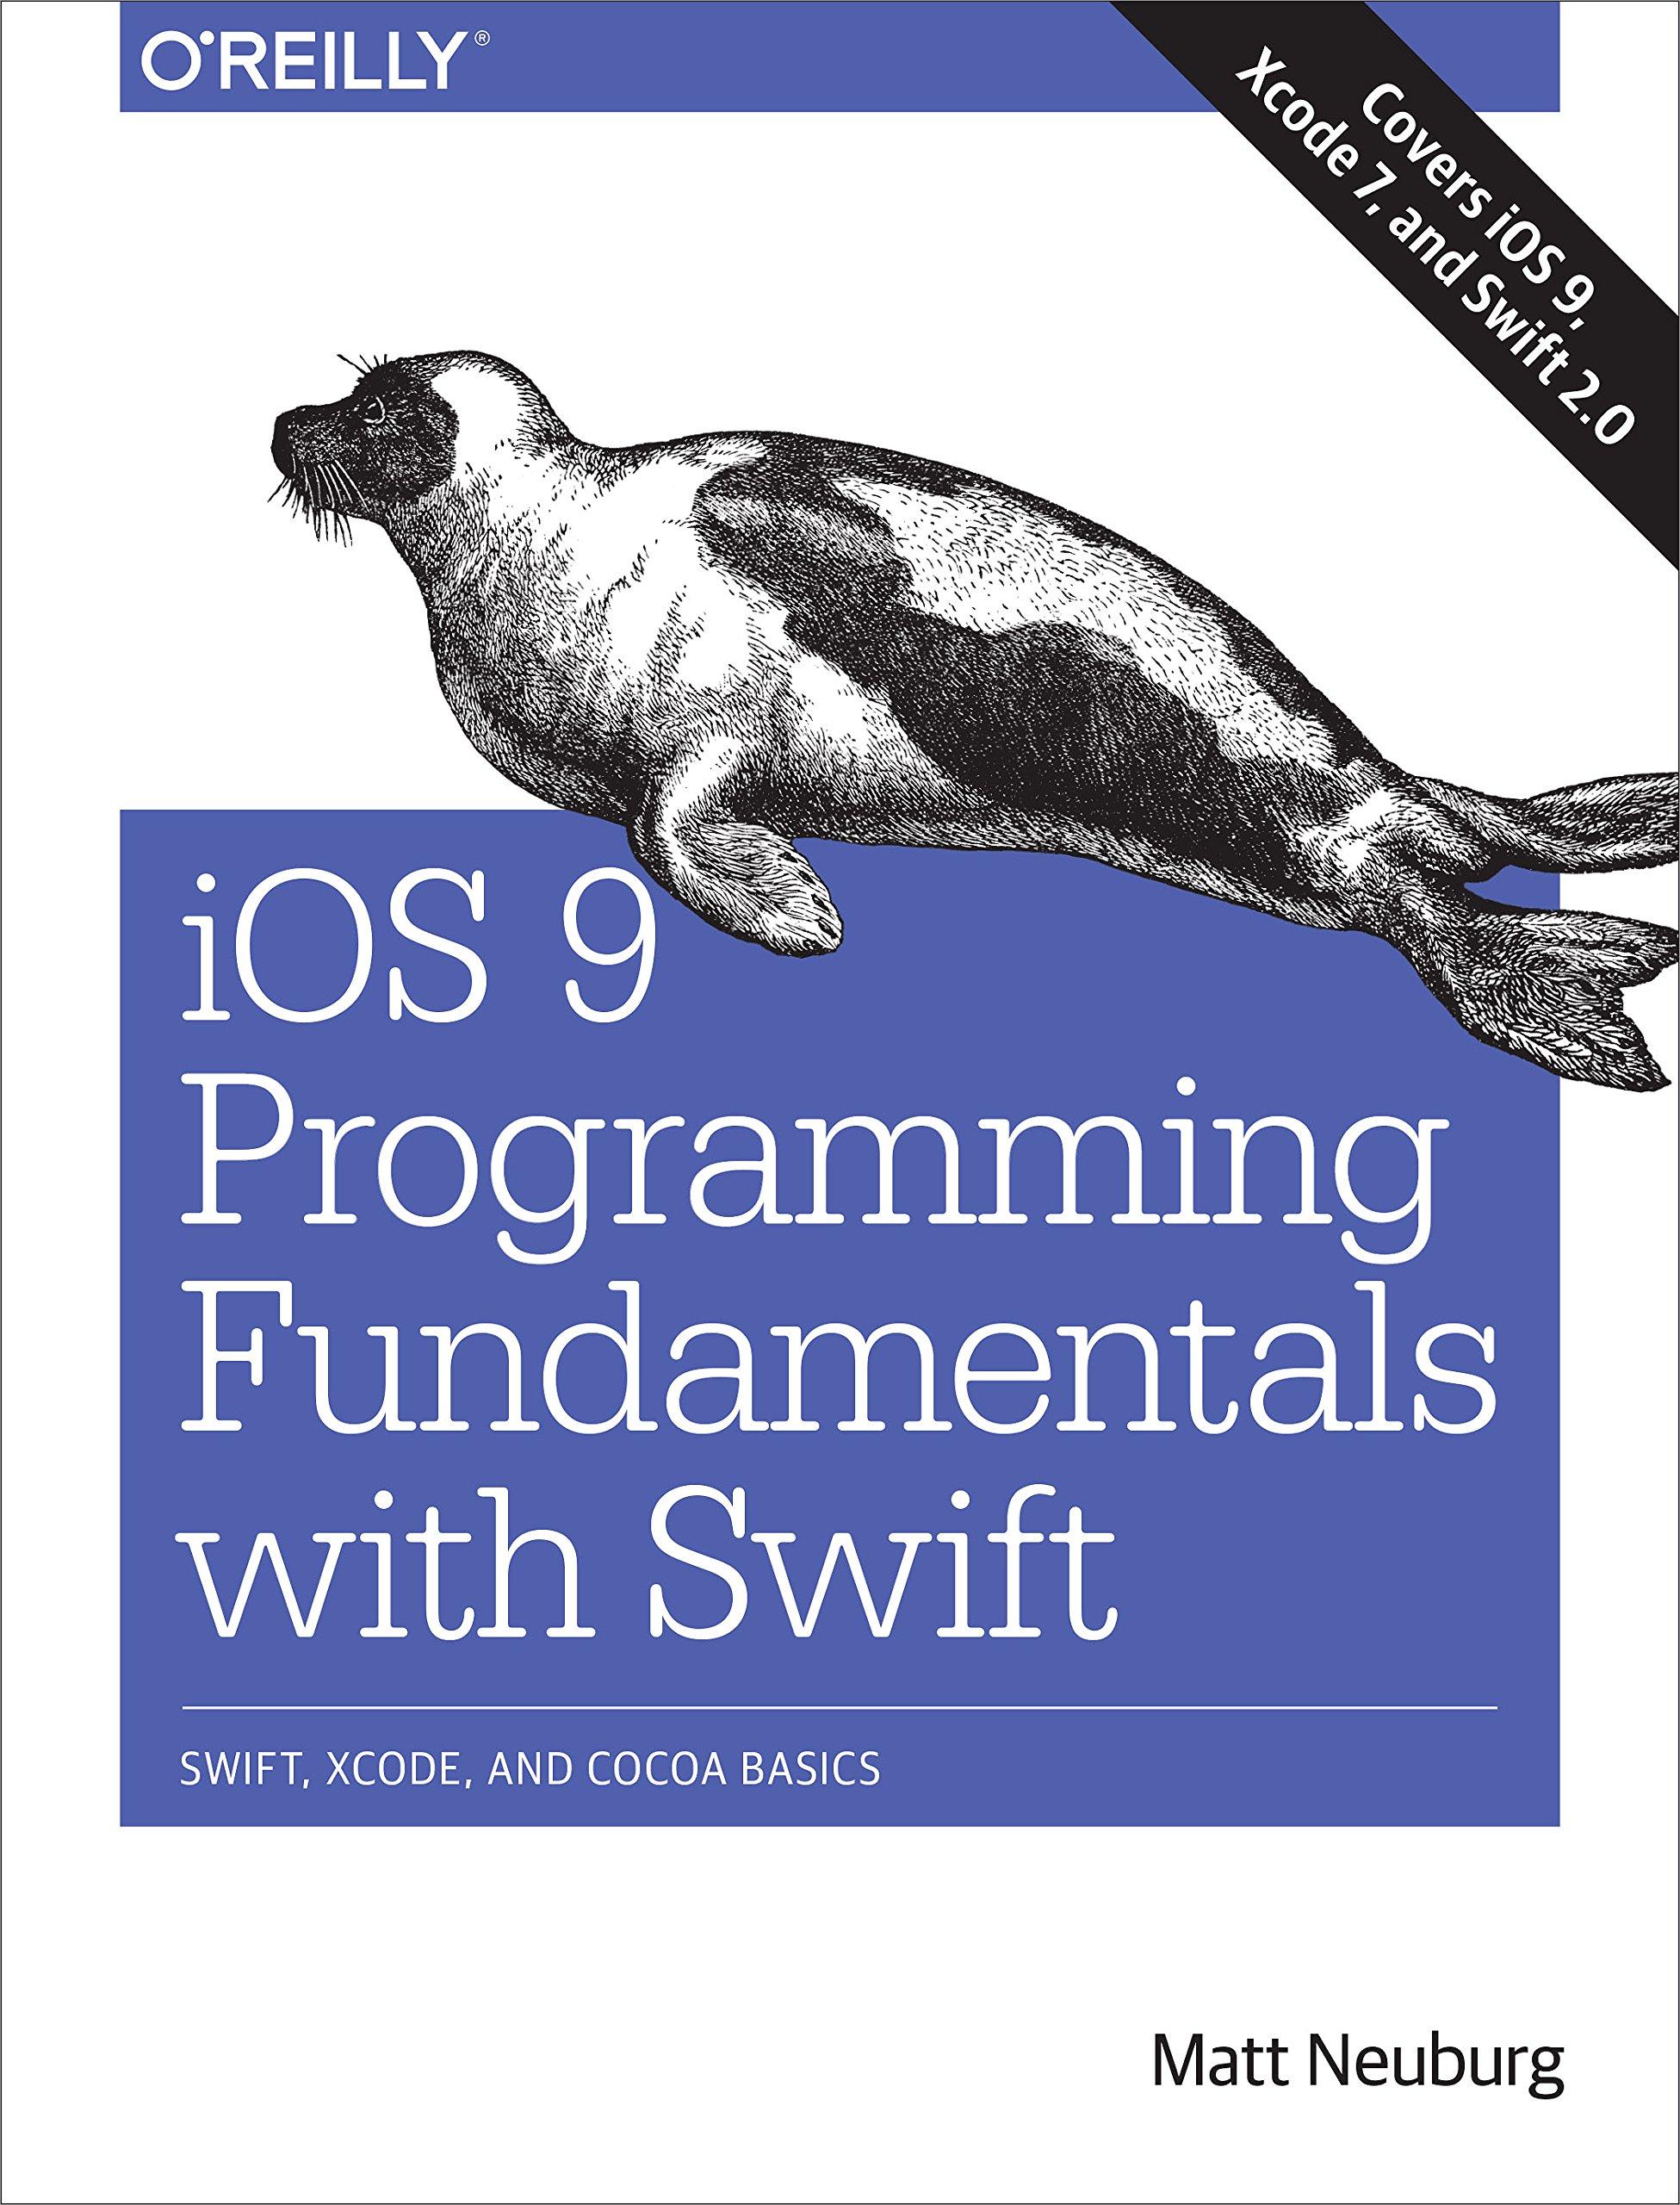 ios 9 programming fundamentals with swift swift xcode and cocoa basics 1st edition matt neuburg 1491936770,